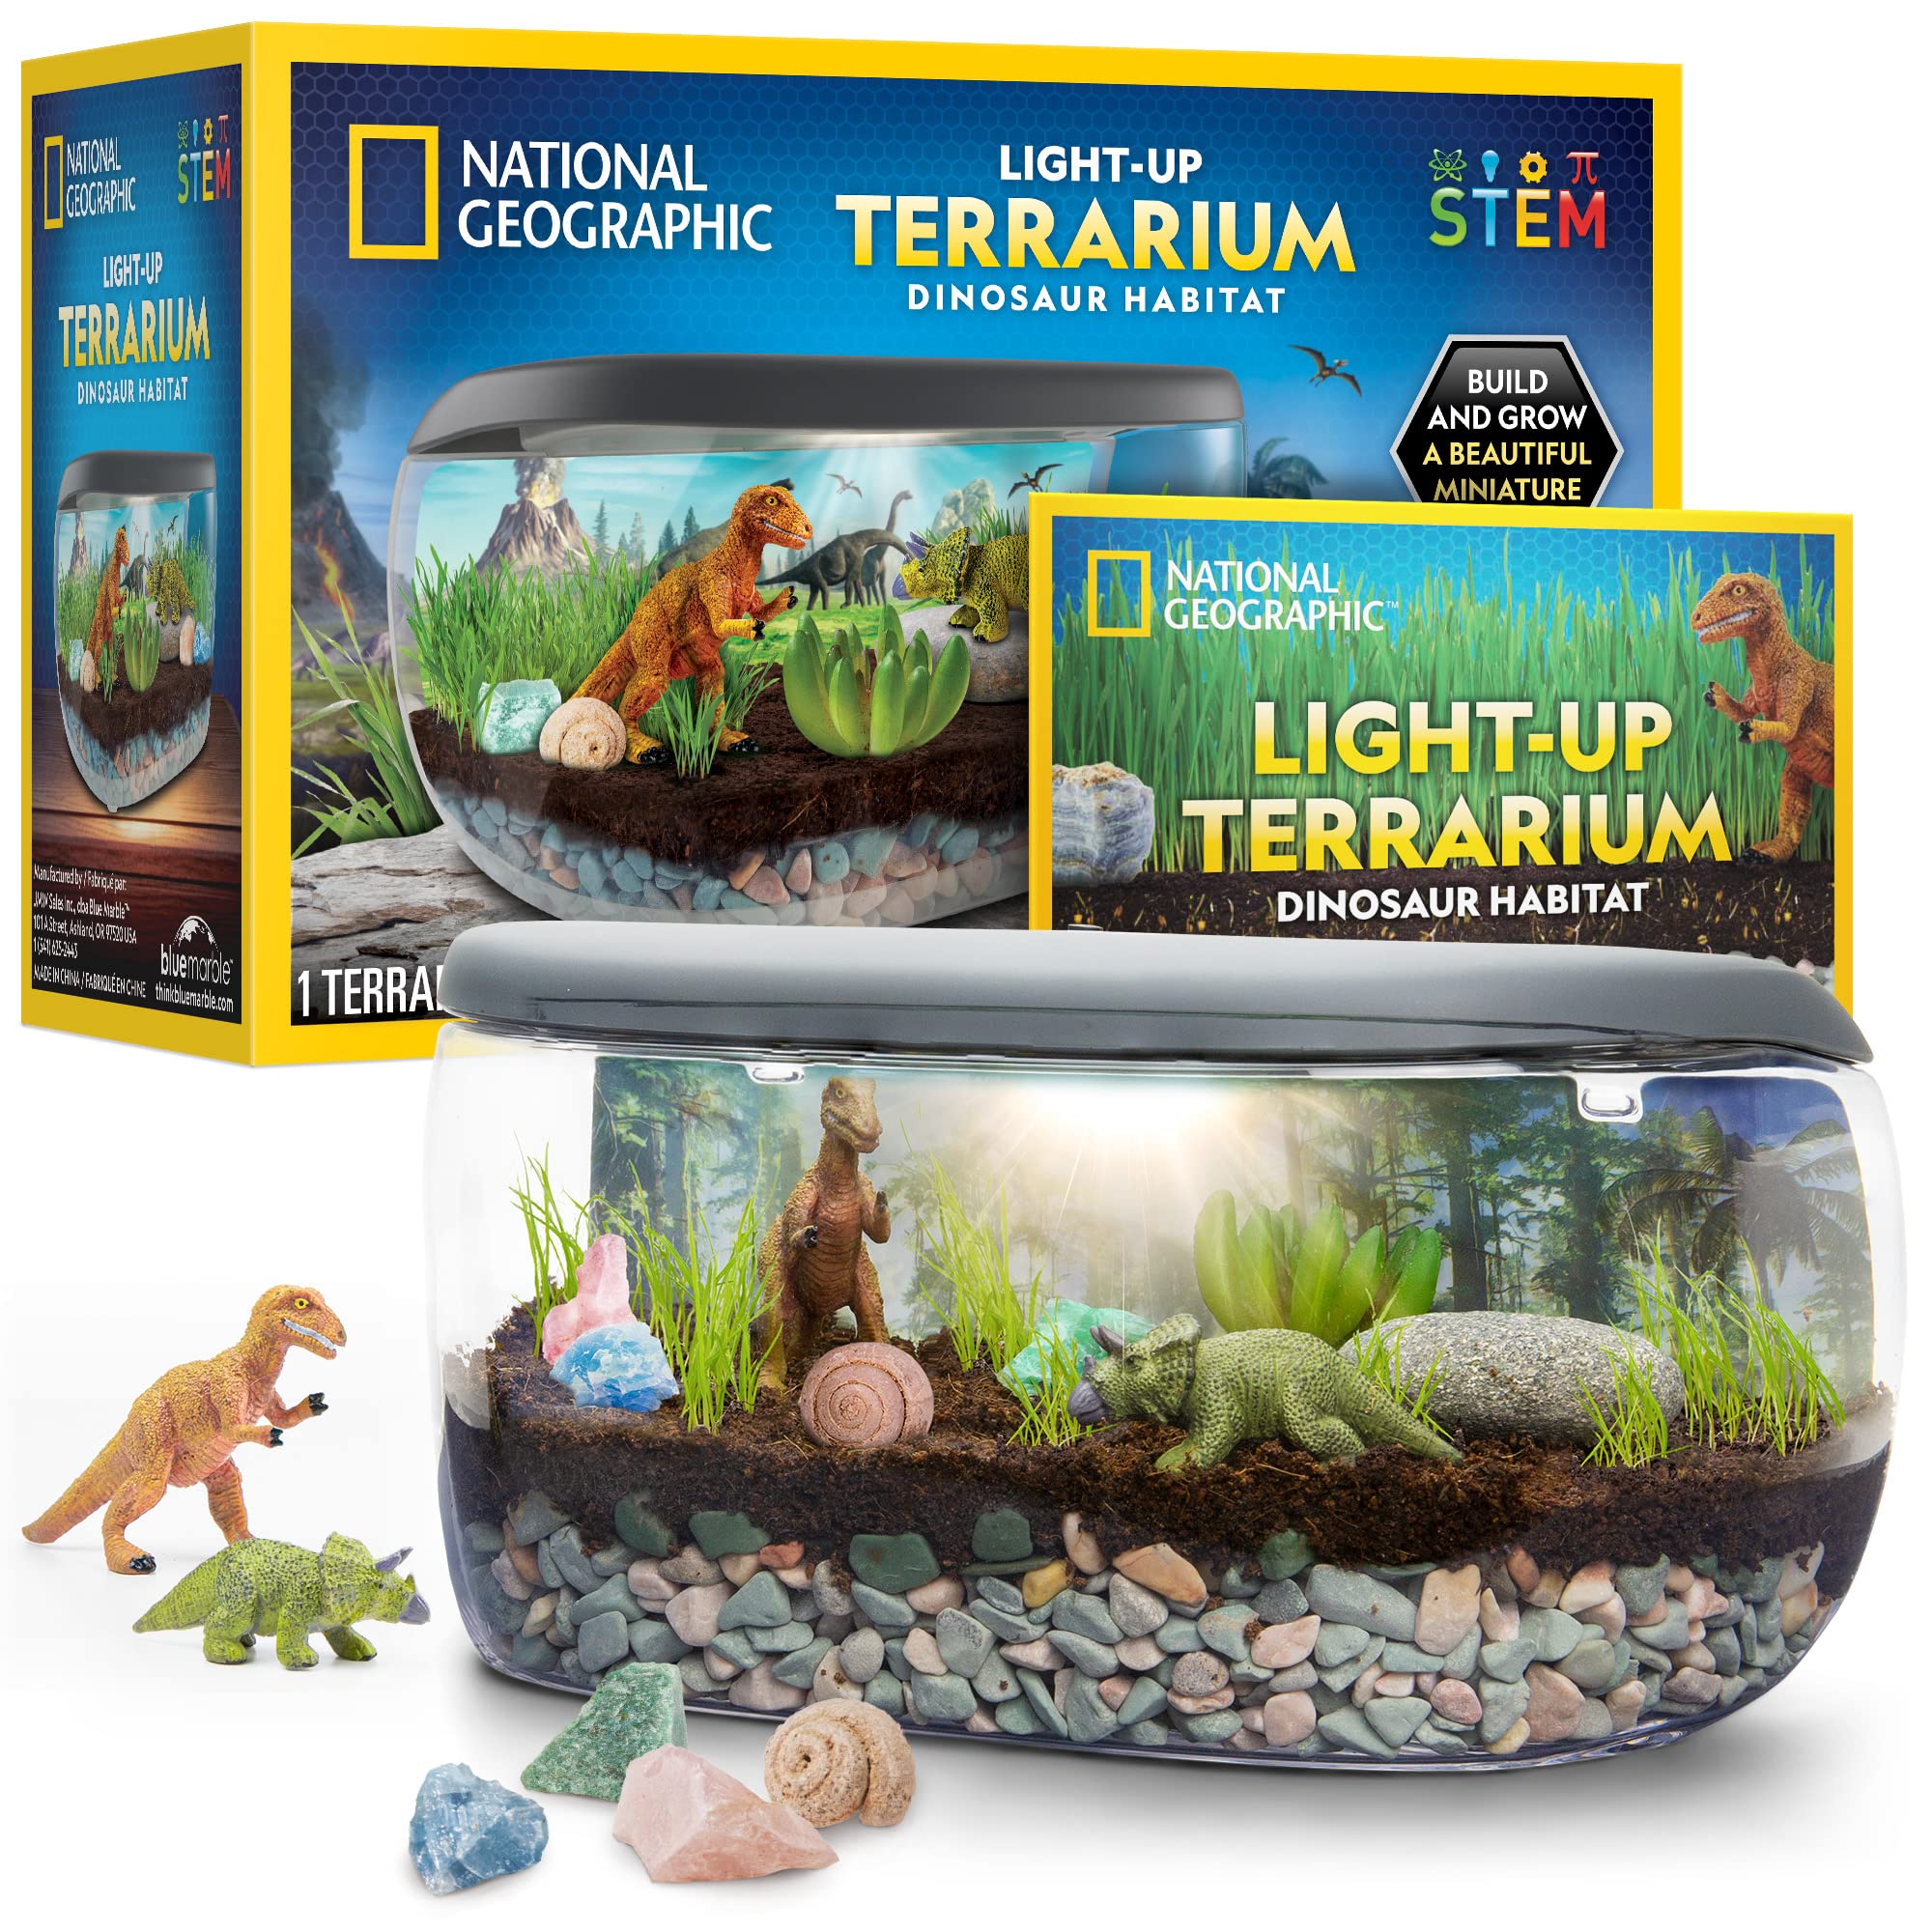 NATIONAL GEOGRAPHIC Light Up Terrarium Kit for Kids